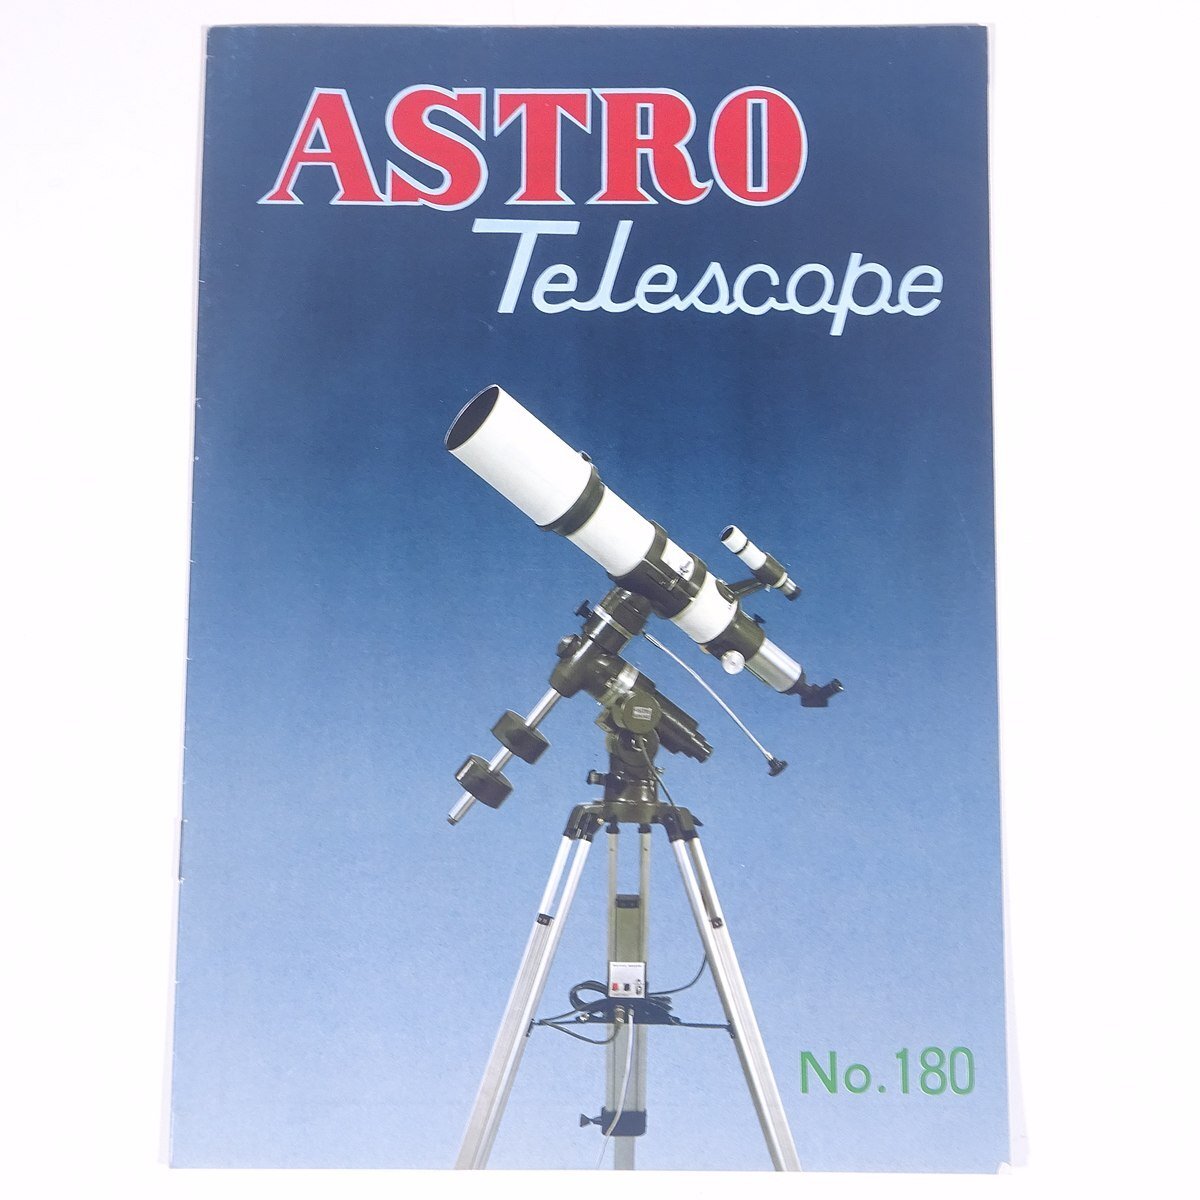 ASTORO アストロ Telescope テレスコープ No.180 アストロ光学工業株式会社 1979 小冊子 カタログ パンフレット 望遠鏡 双眼鏡 天体観測の画像1